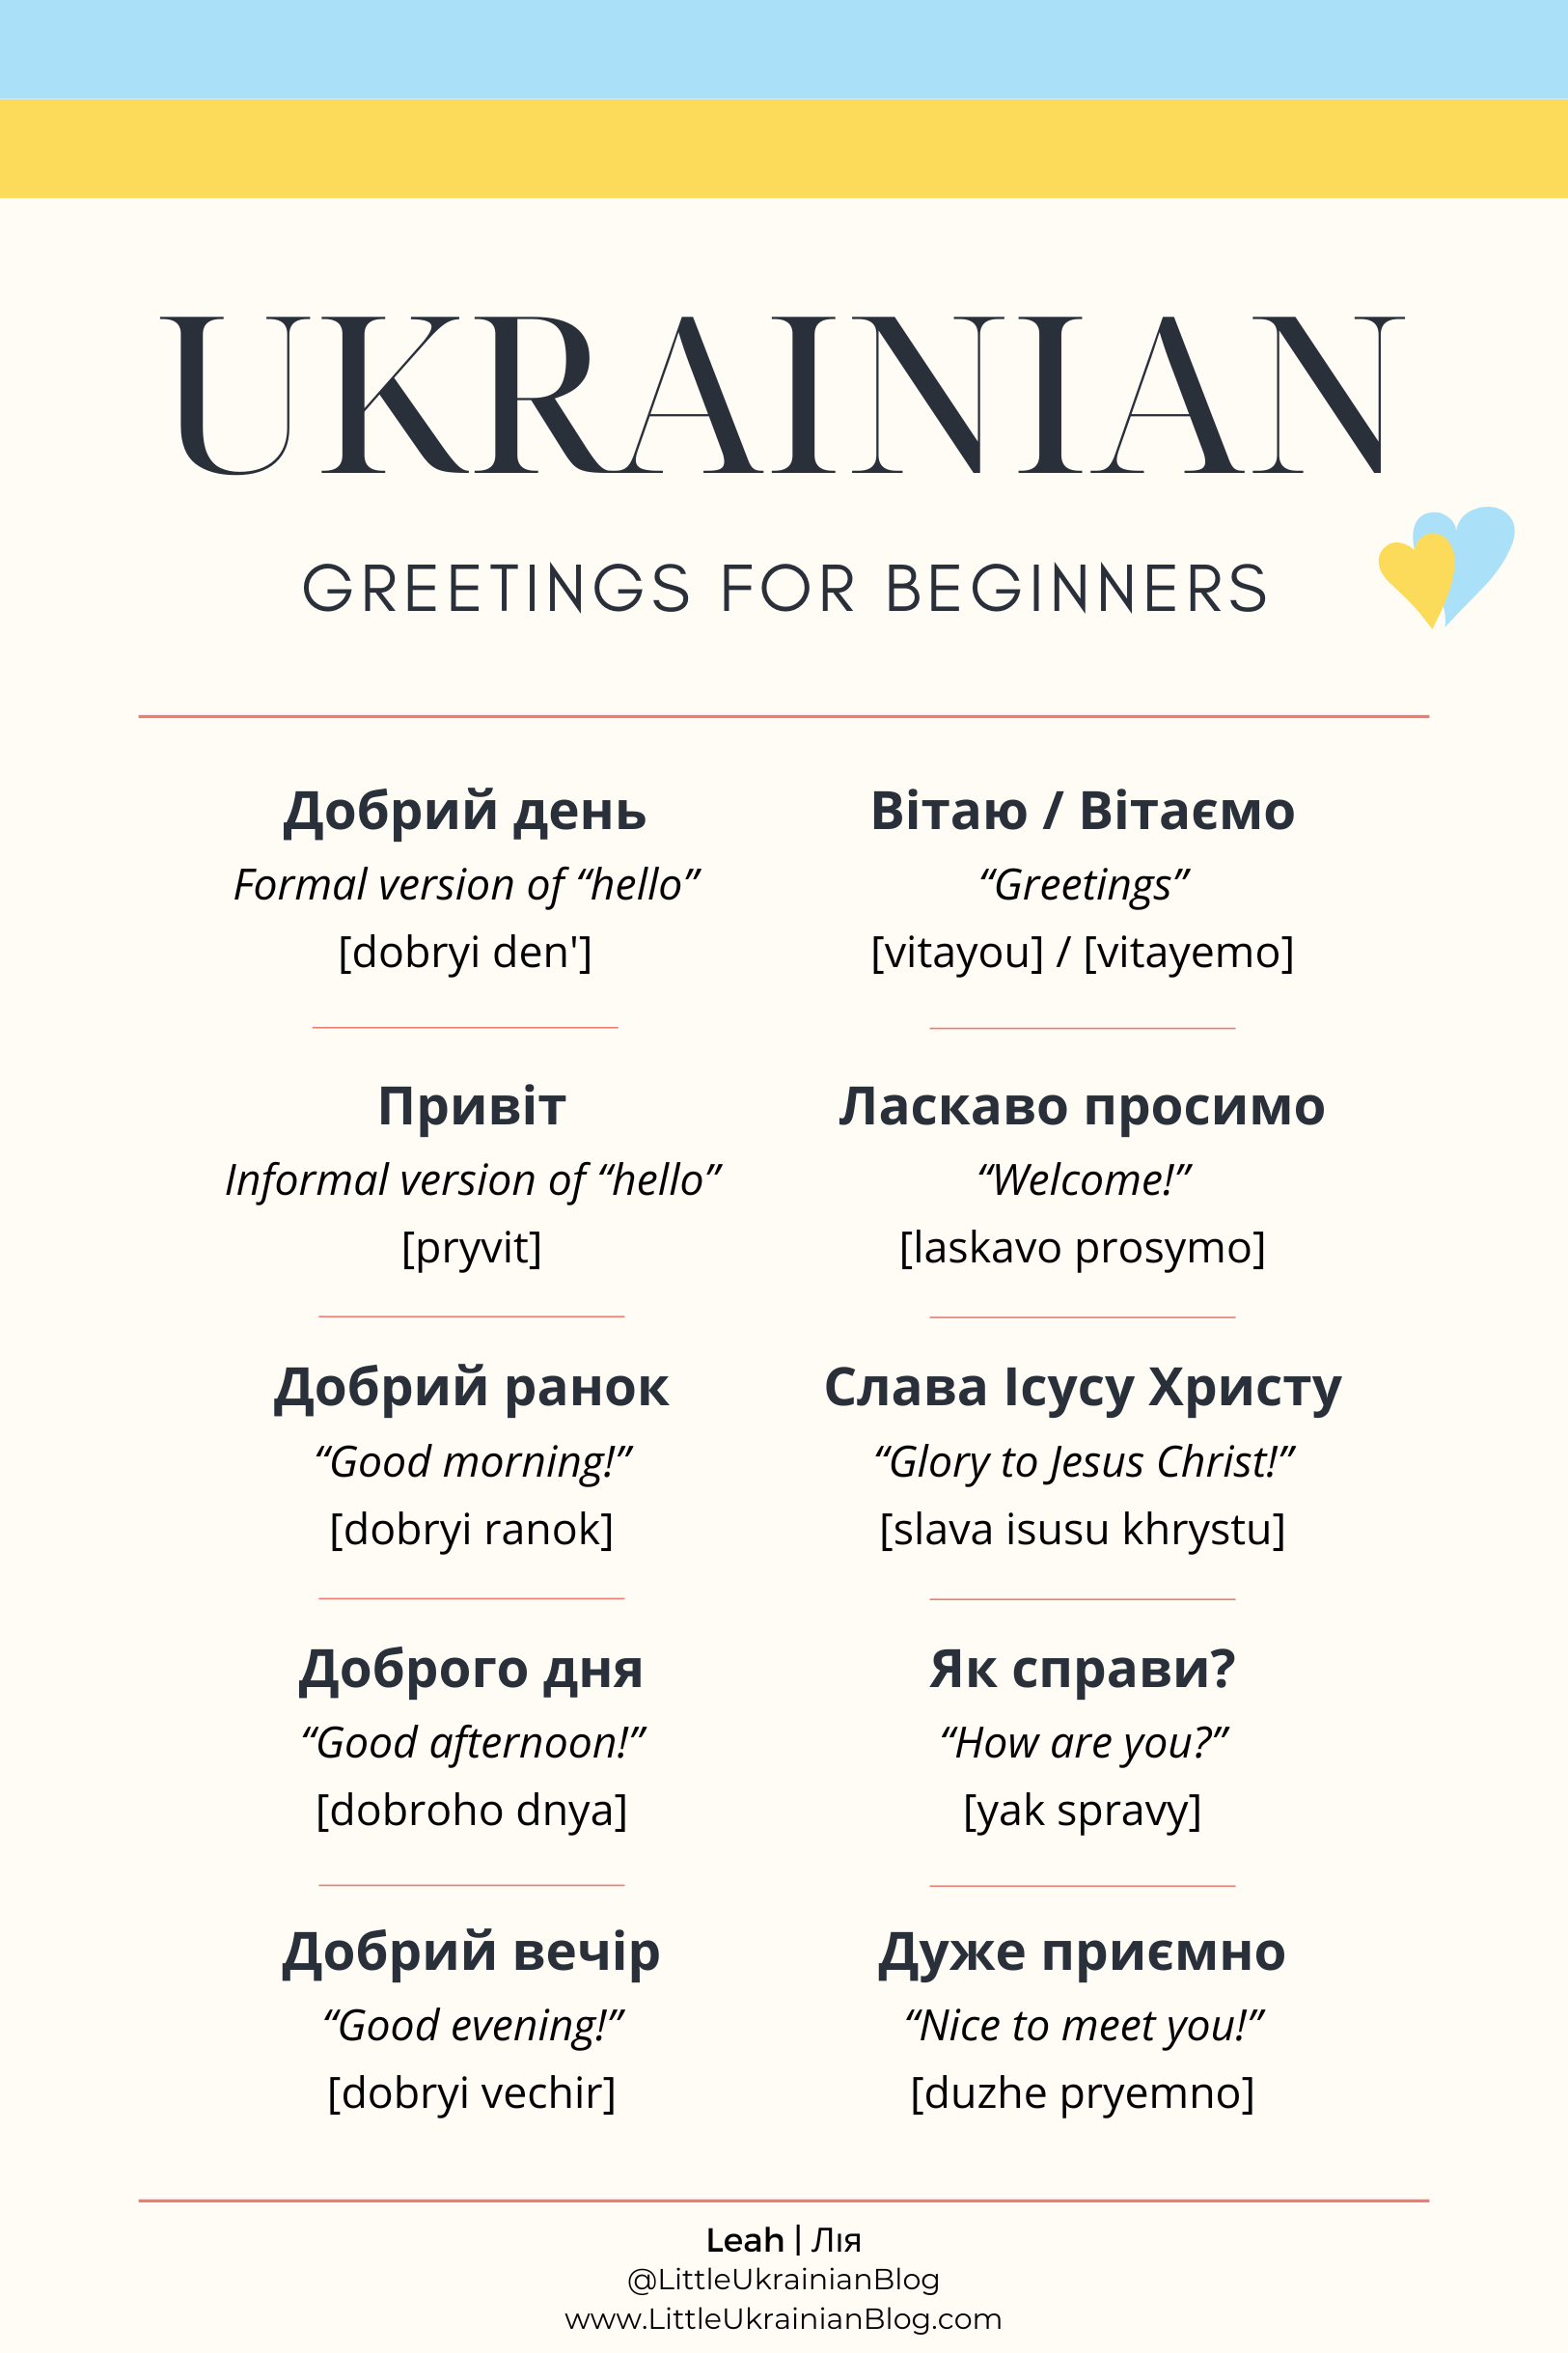 Little Ukrainian Blog, Pinterest, Ukraine, Ukrainian Greetings, Learn Ukrainian